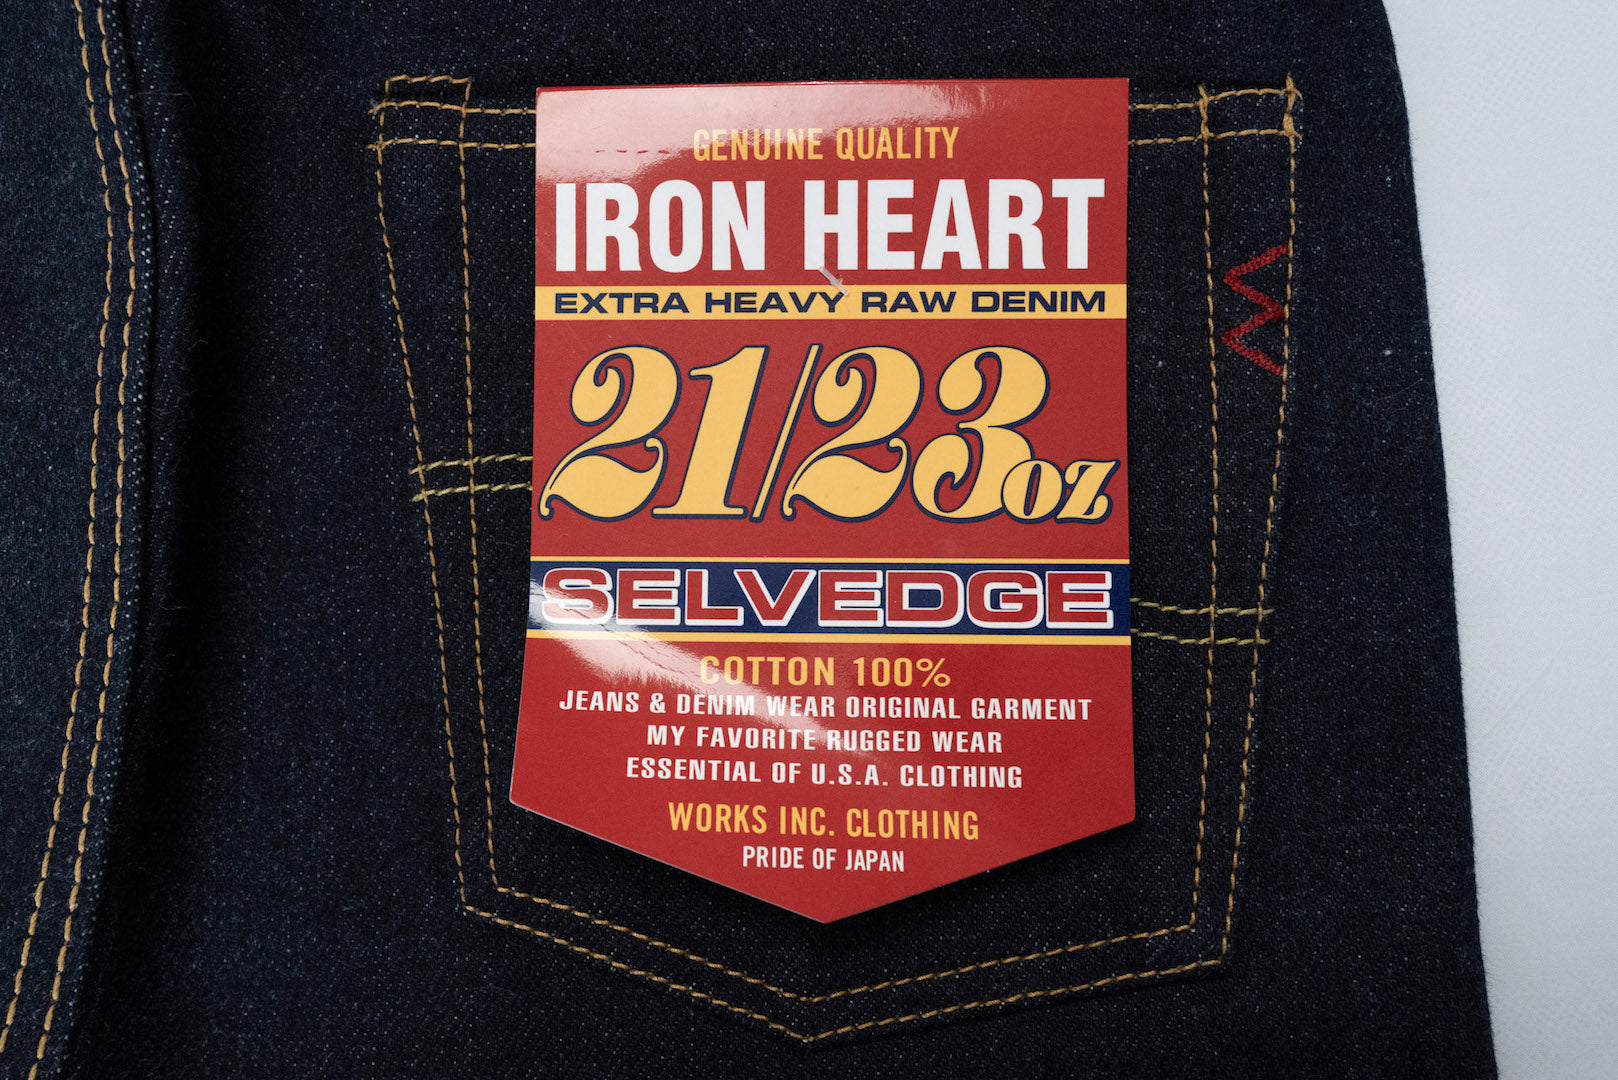 Iron Heart 555S-UHR 21/23oz Denim (Slim Tapered Fit)